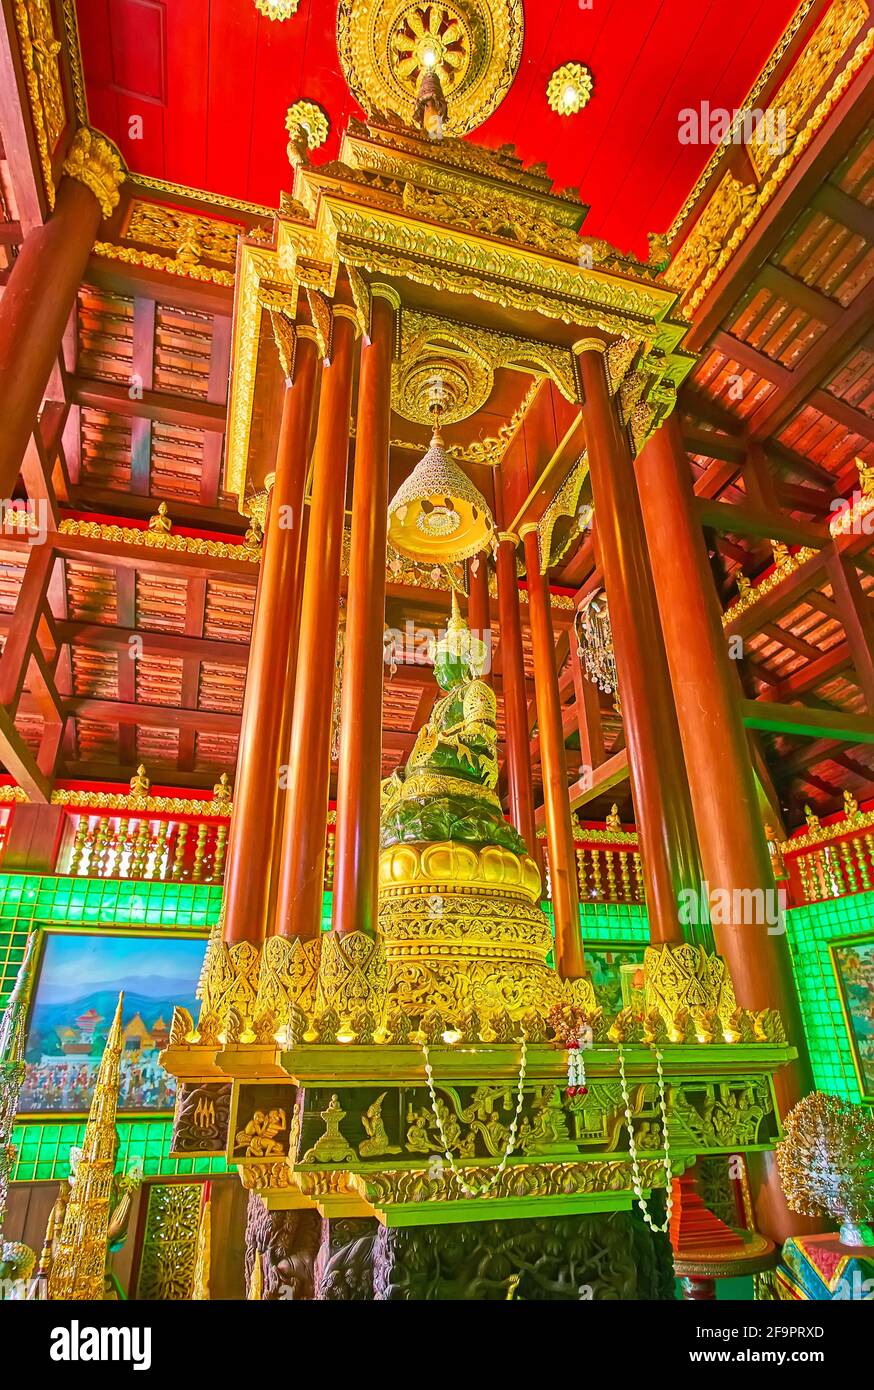 CHIANG RAI, THAILAND - MAY 11, 2019: The Emerald Buddha copy or the Phra Yok Chiang Rai Image in Ubosot of Wat Phra Kaew Temple, on May 11 in Chiang R Stock Photo